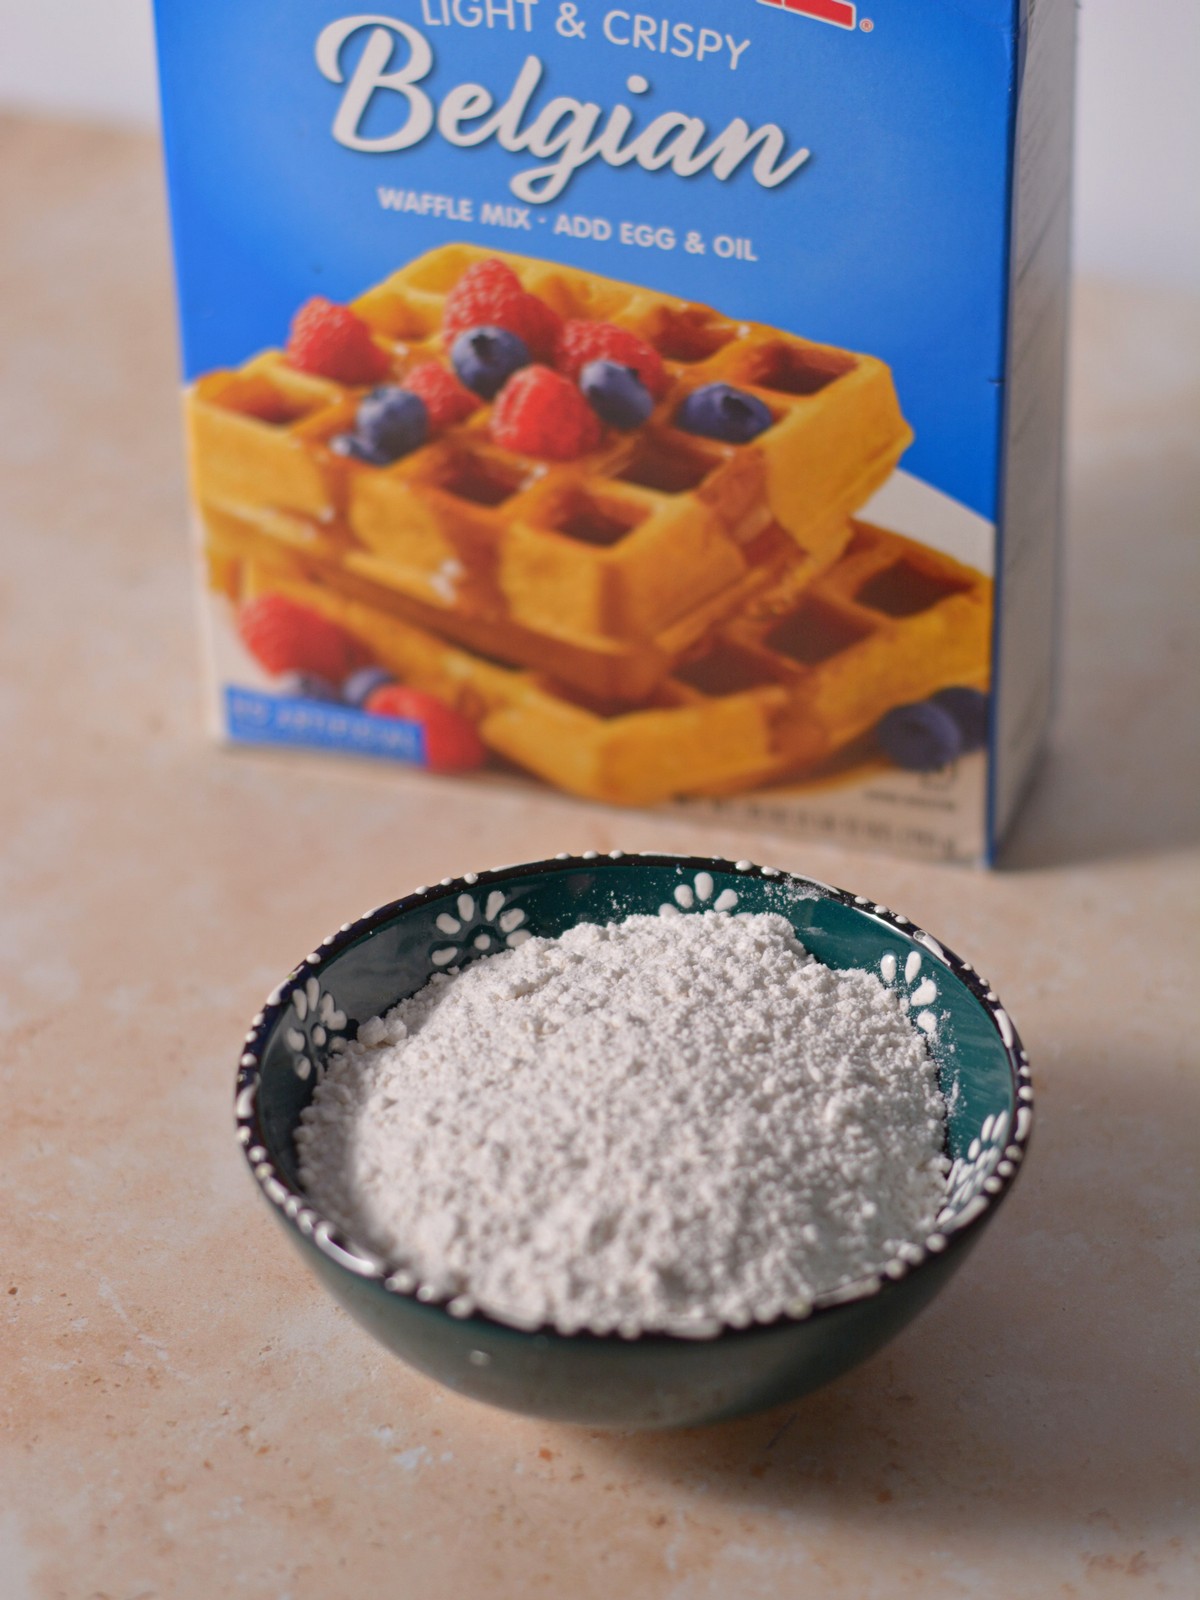 A bowl of pancake mix next to the box.